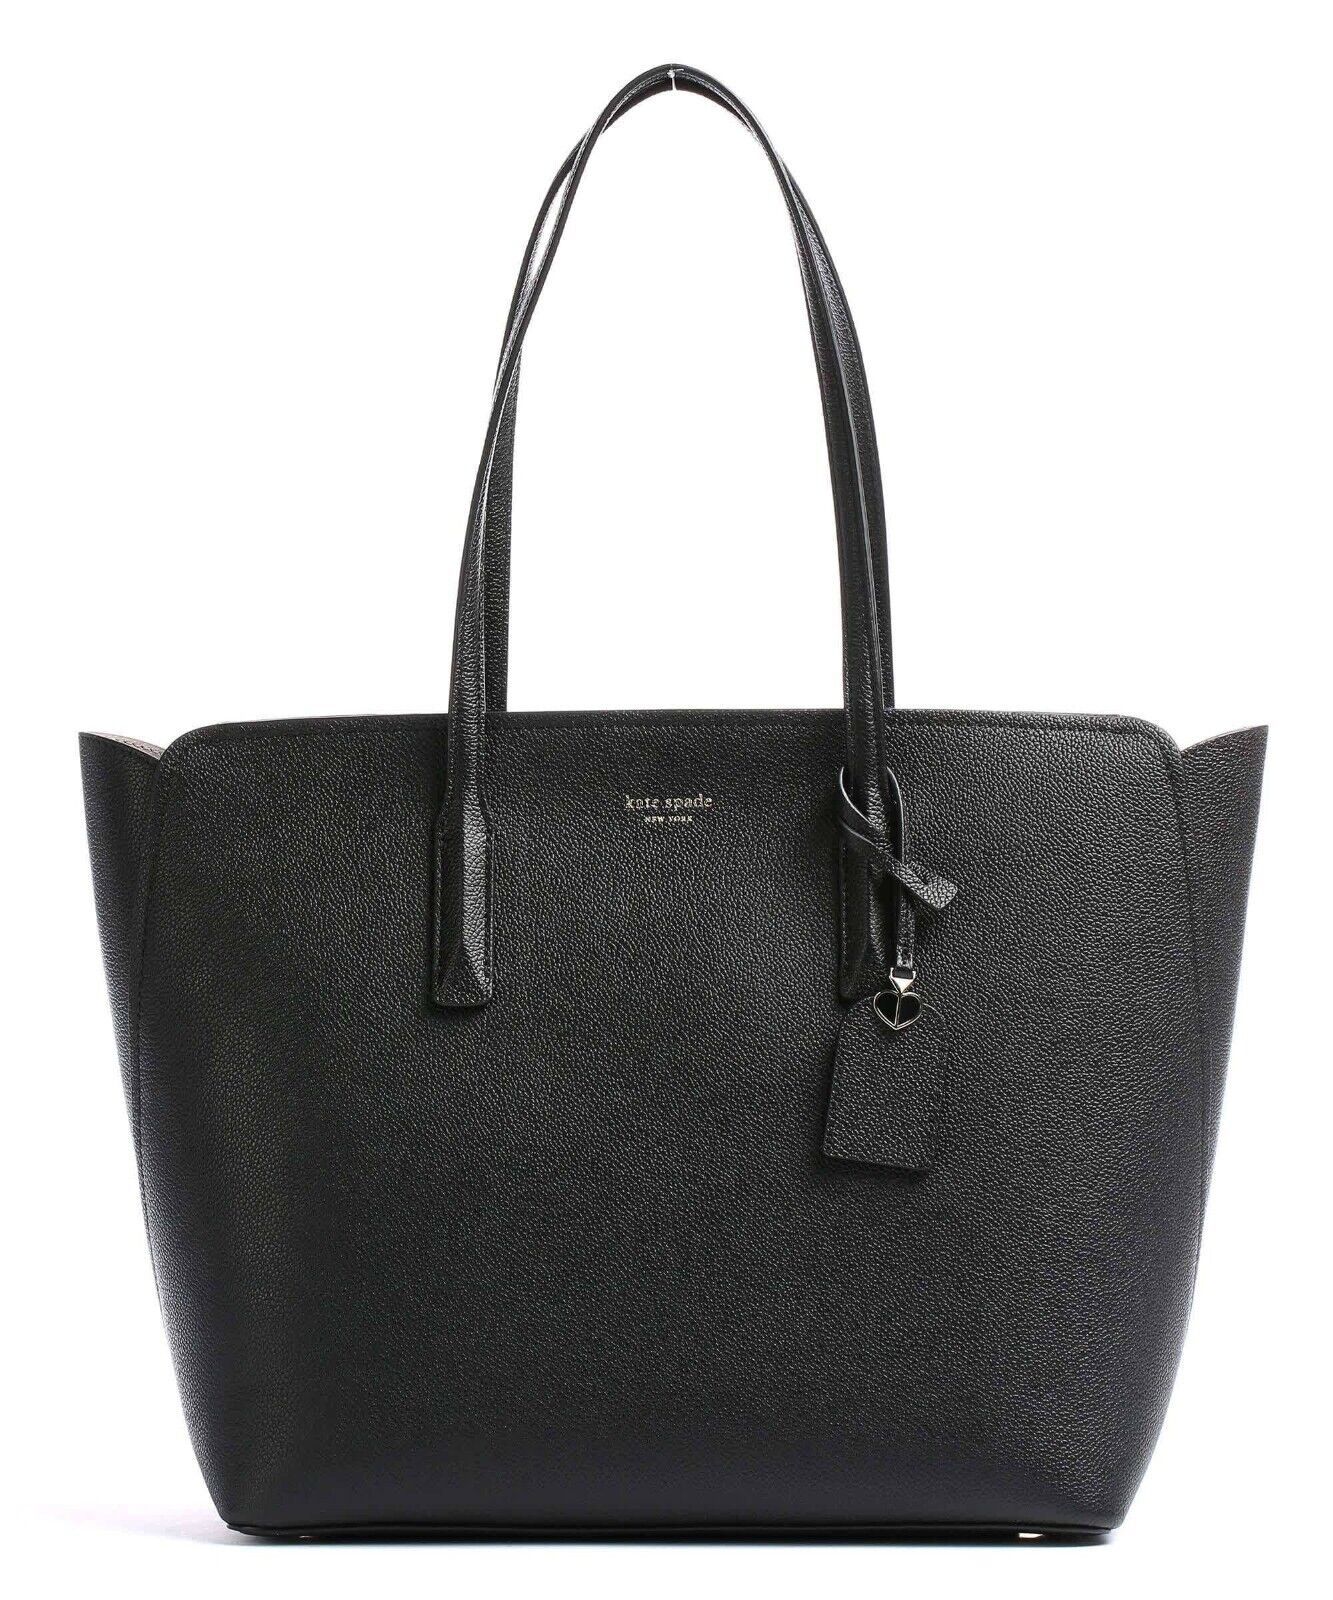 Kate Spade Margaux Black Leather Large Tote Bag Charm PXRUA226 NWT $298 MSRP FS